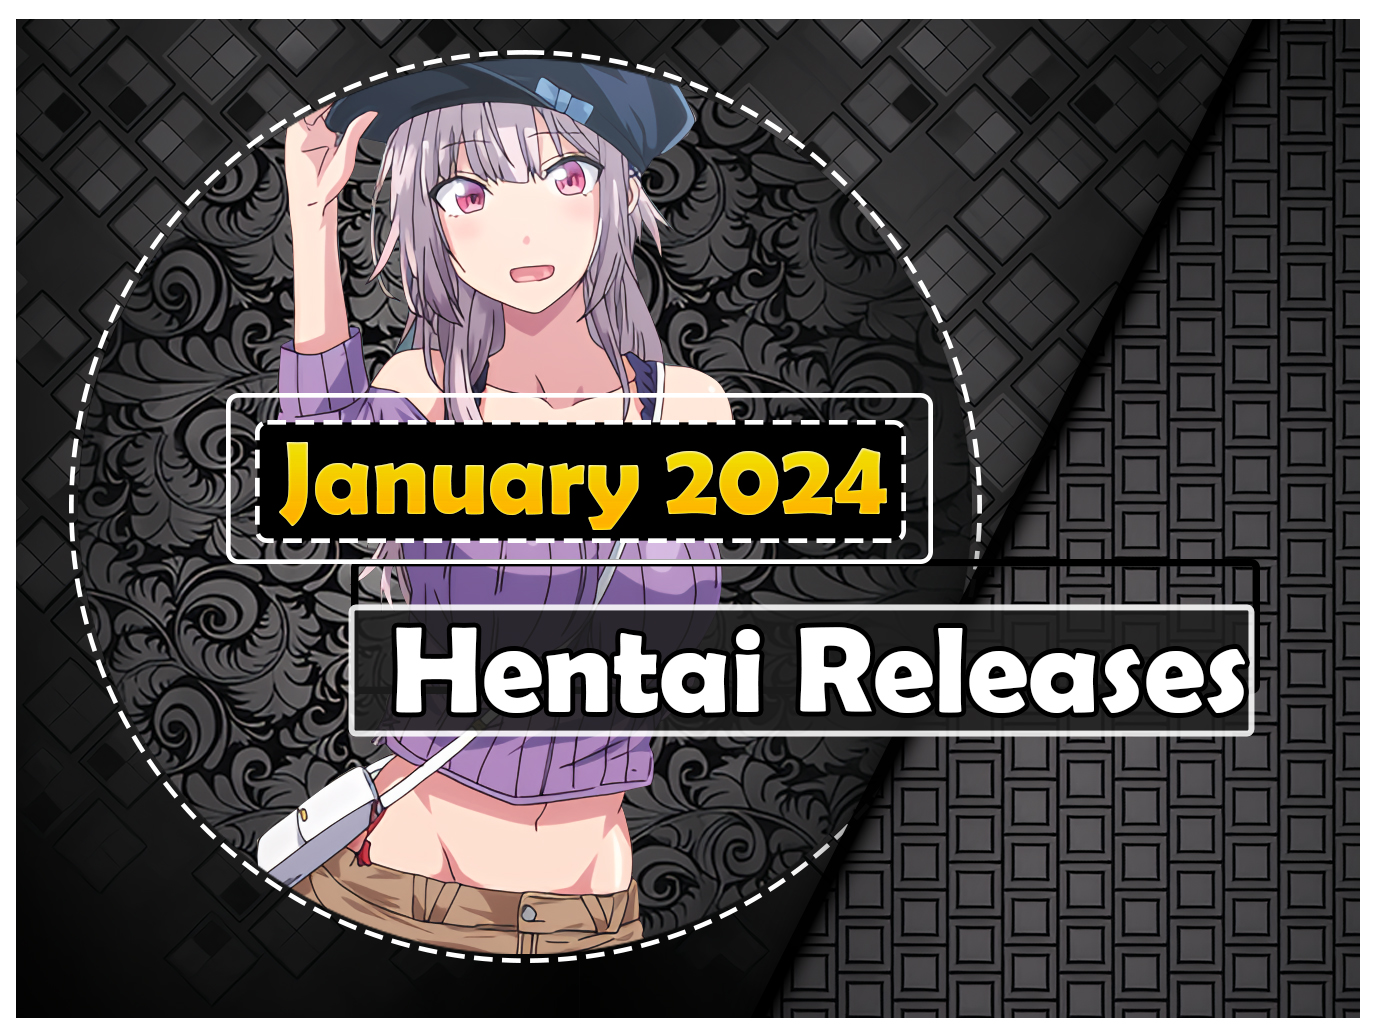 January hentai